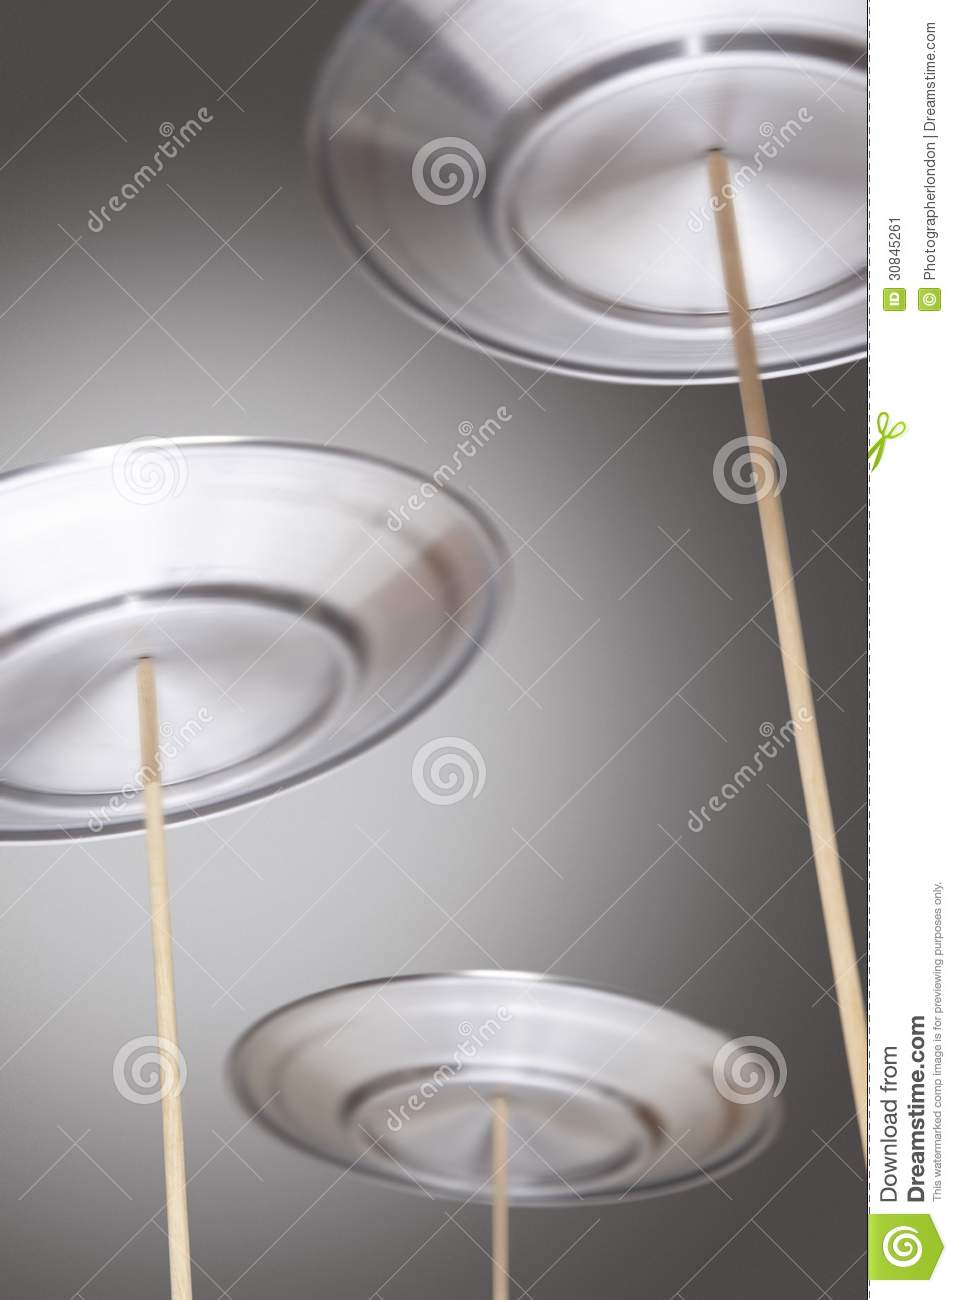 Plates Spinning On Sticks Stock Image   Image  30845261